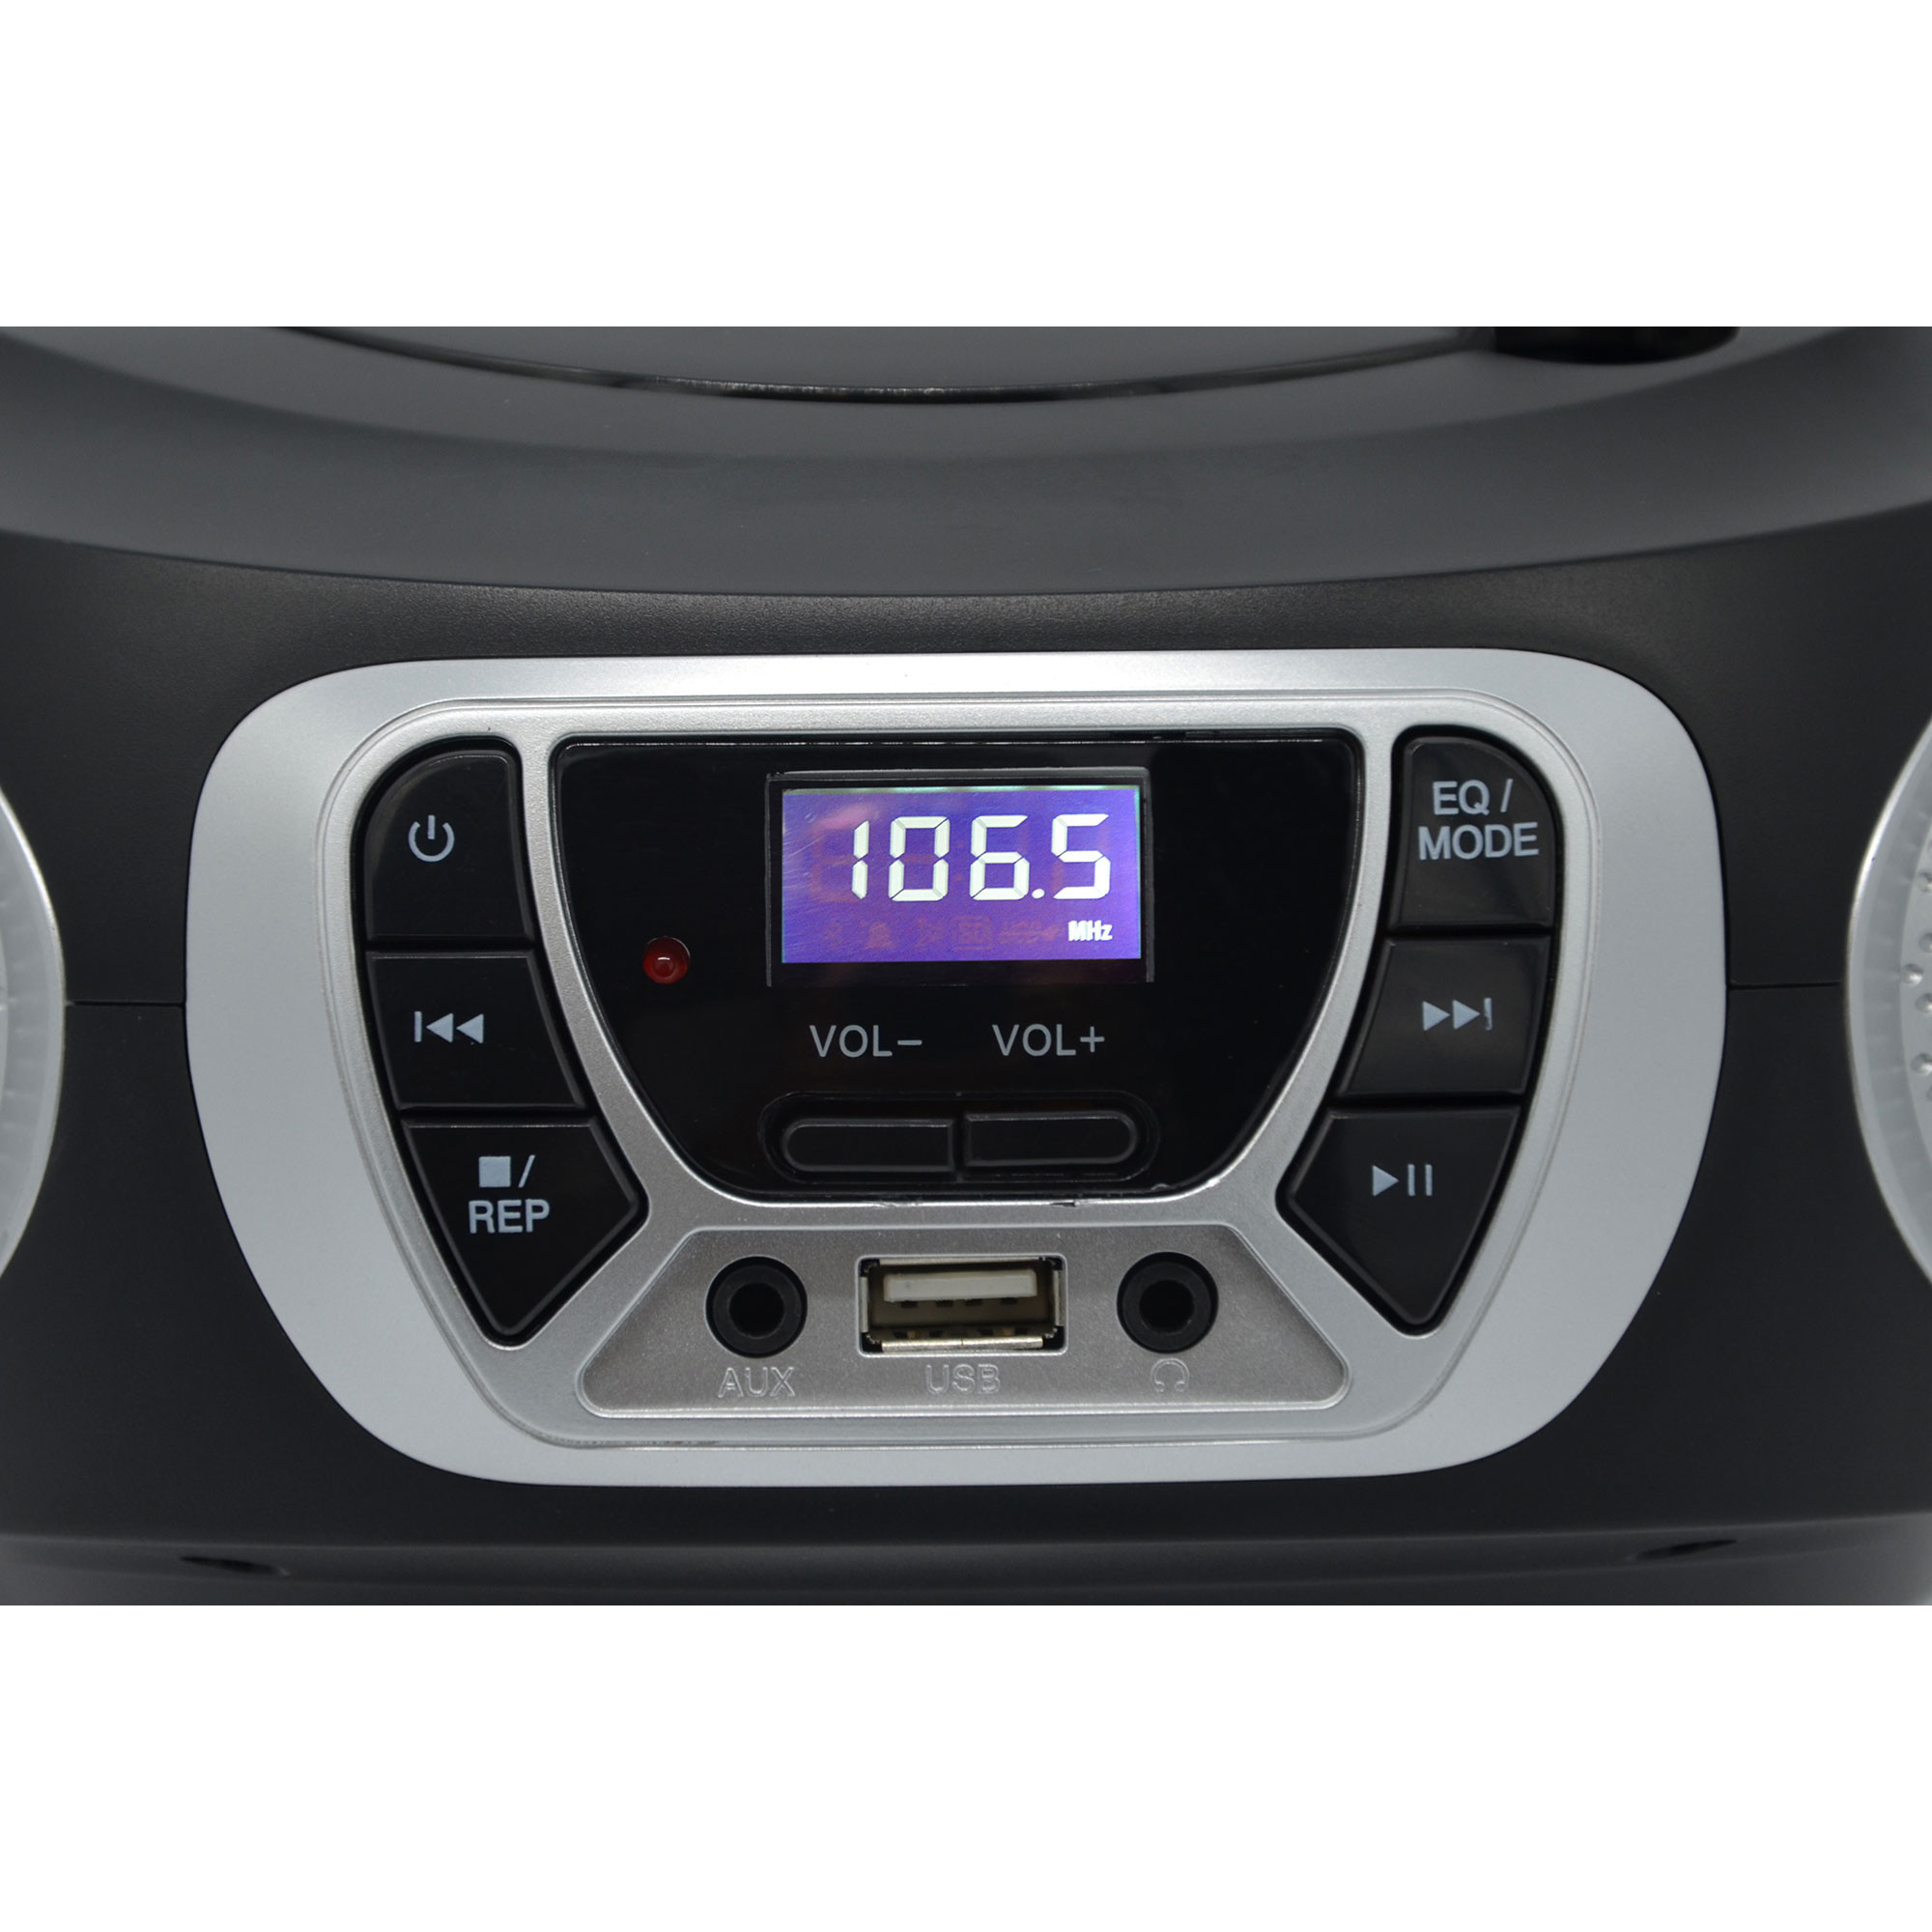 Roadstar RCR-4635UMP/BK Radio CD Portátil Cassette, Radio Digital PLL FM,  Boombox Reproductor CD-MP3, USB, AUX-IN, Salida de Auriculares, Negro